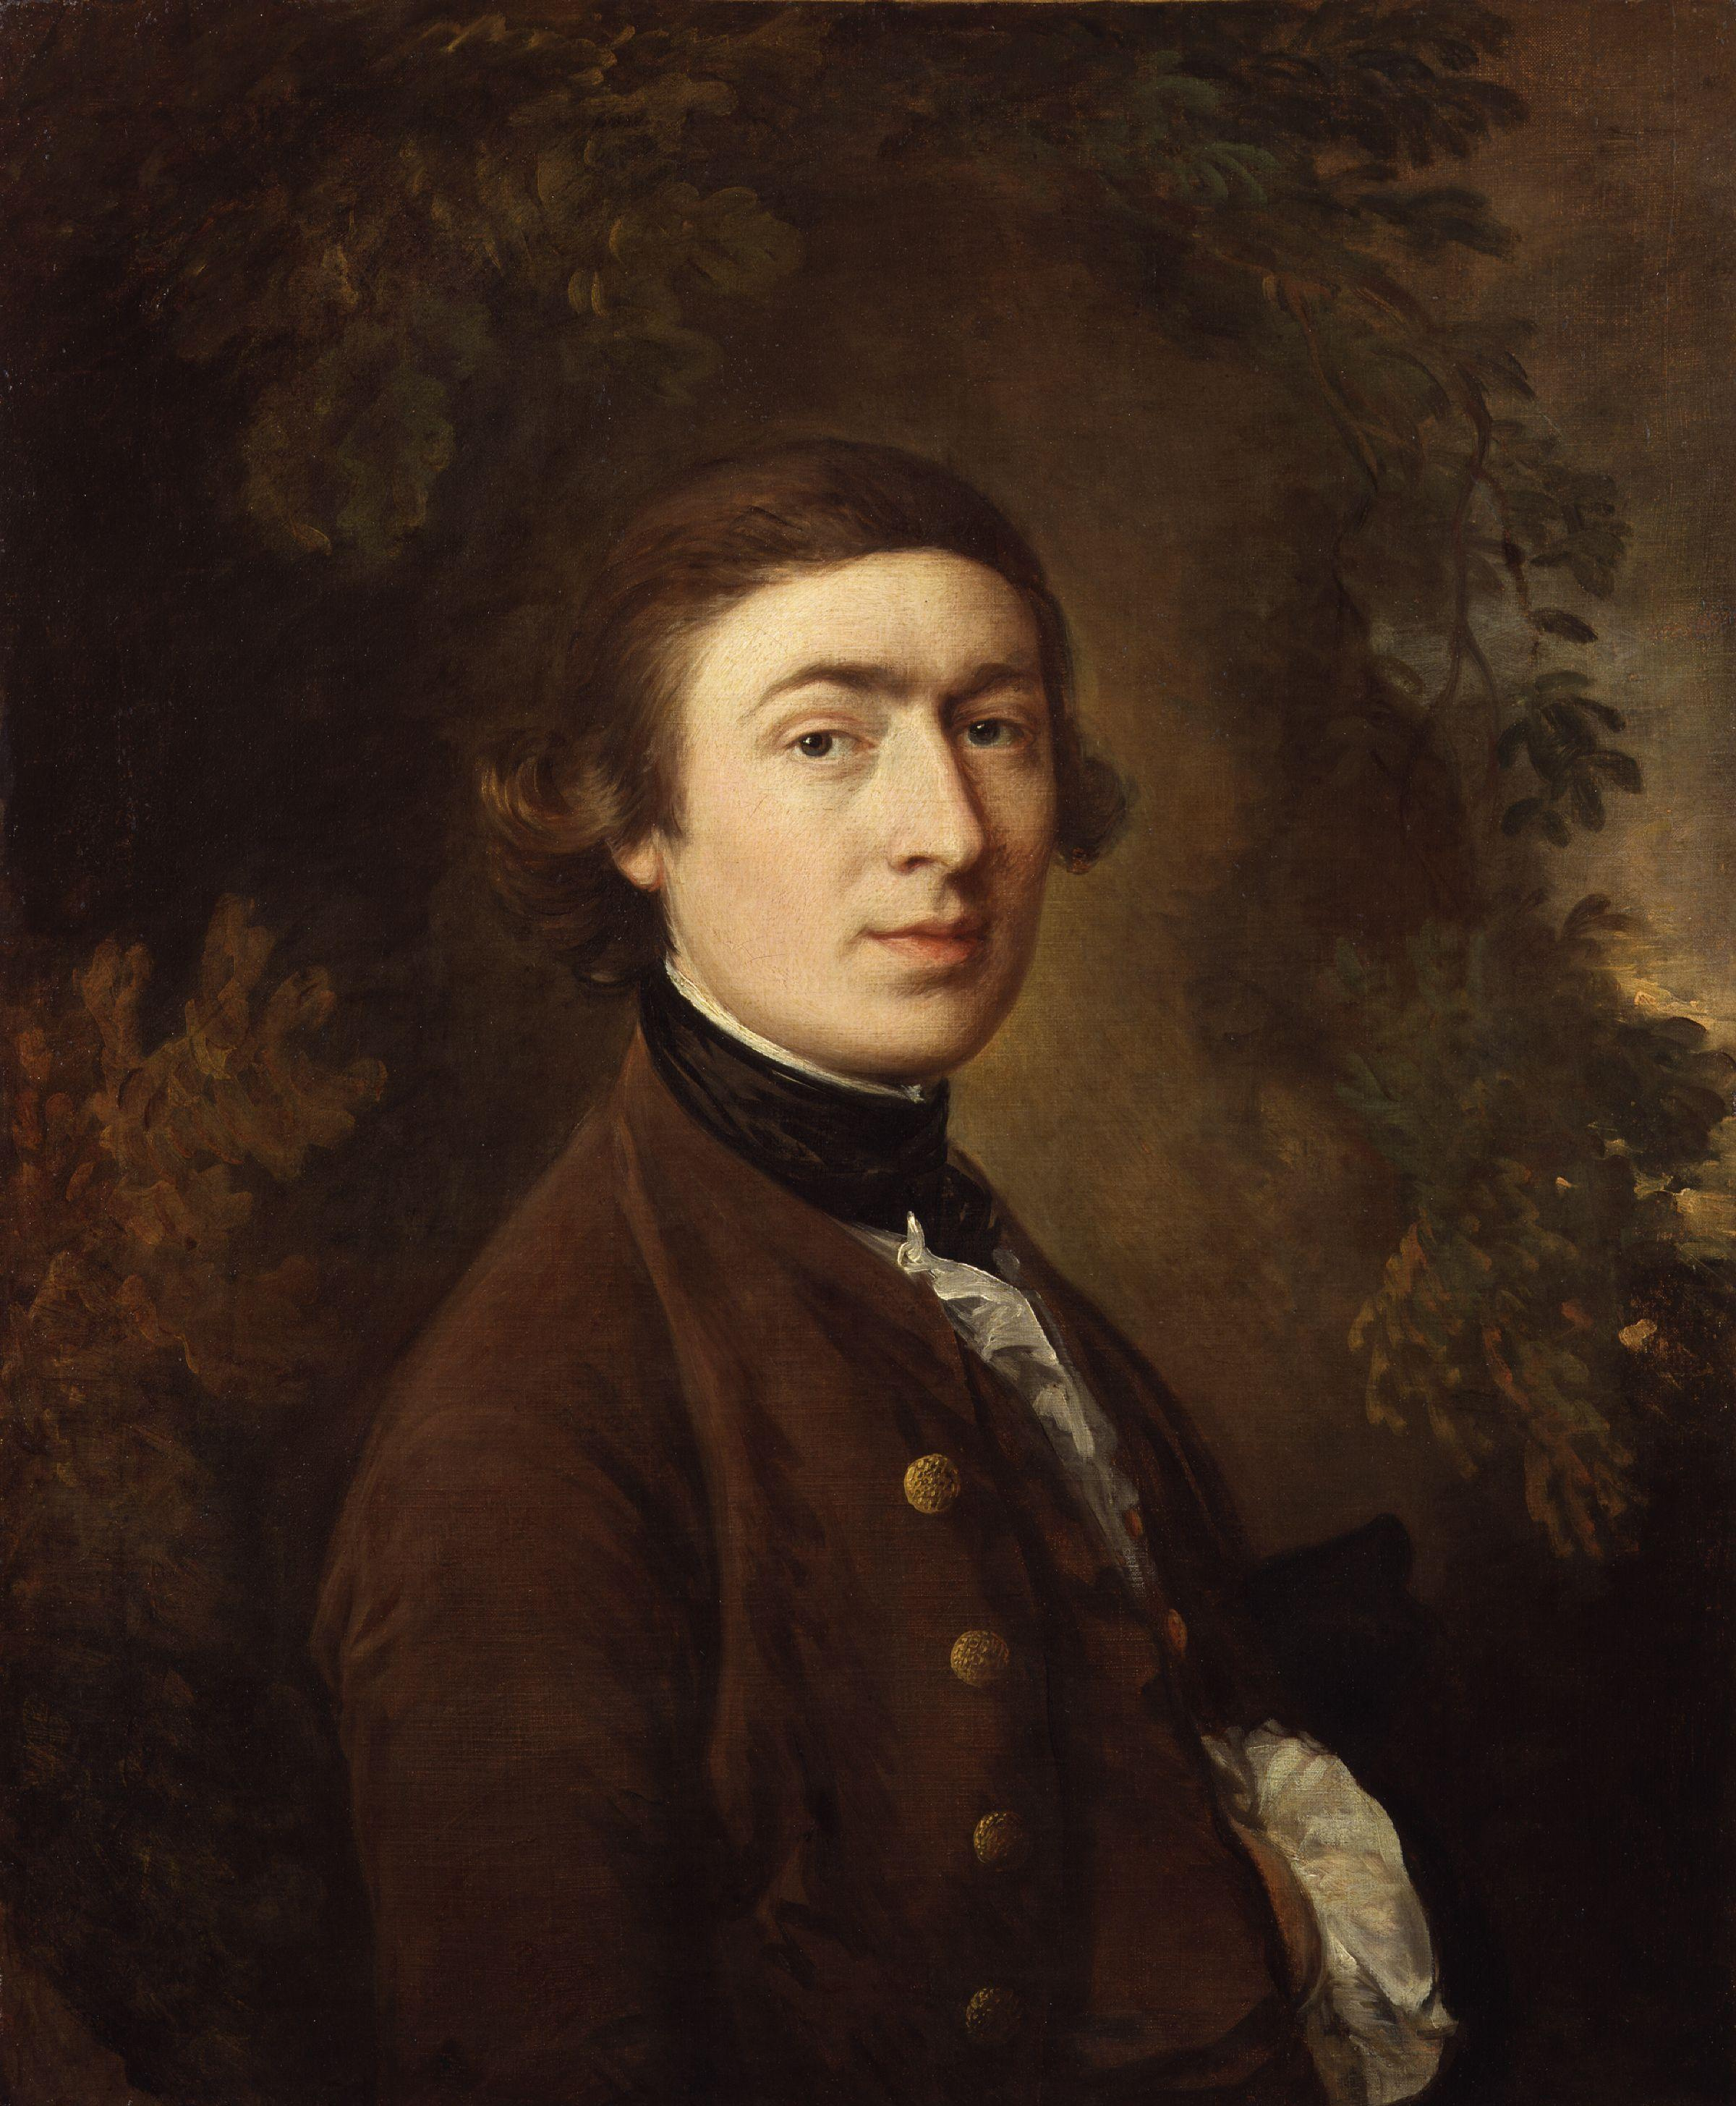 Thomas Gainsborough - 1727 - 2. August 1788